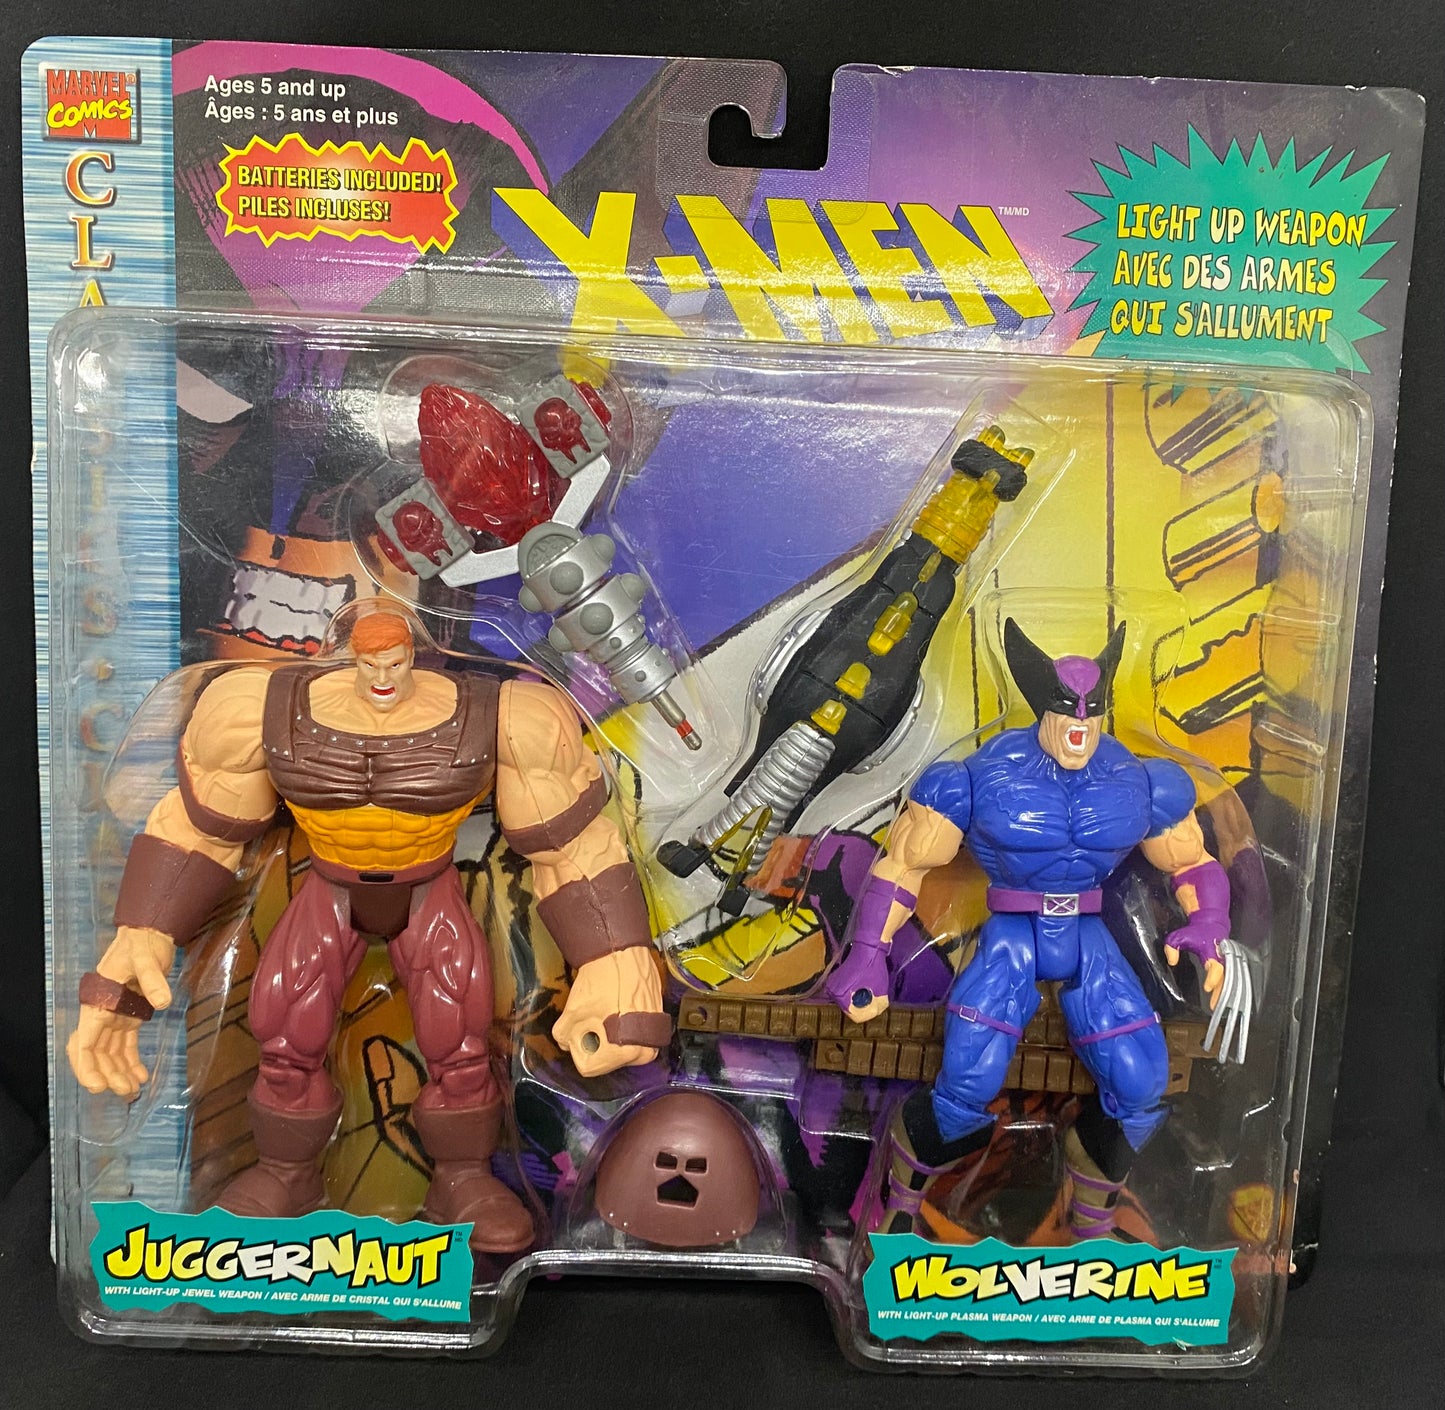 Toybiz Grand Toys X-Men Juggernaut and Wolverine 2 pack w/light up weapon!